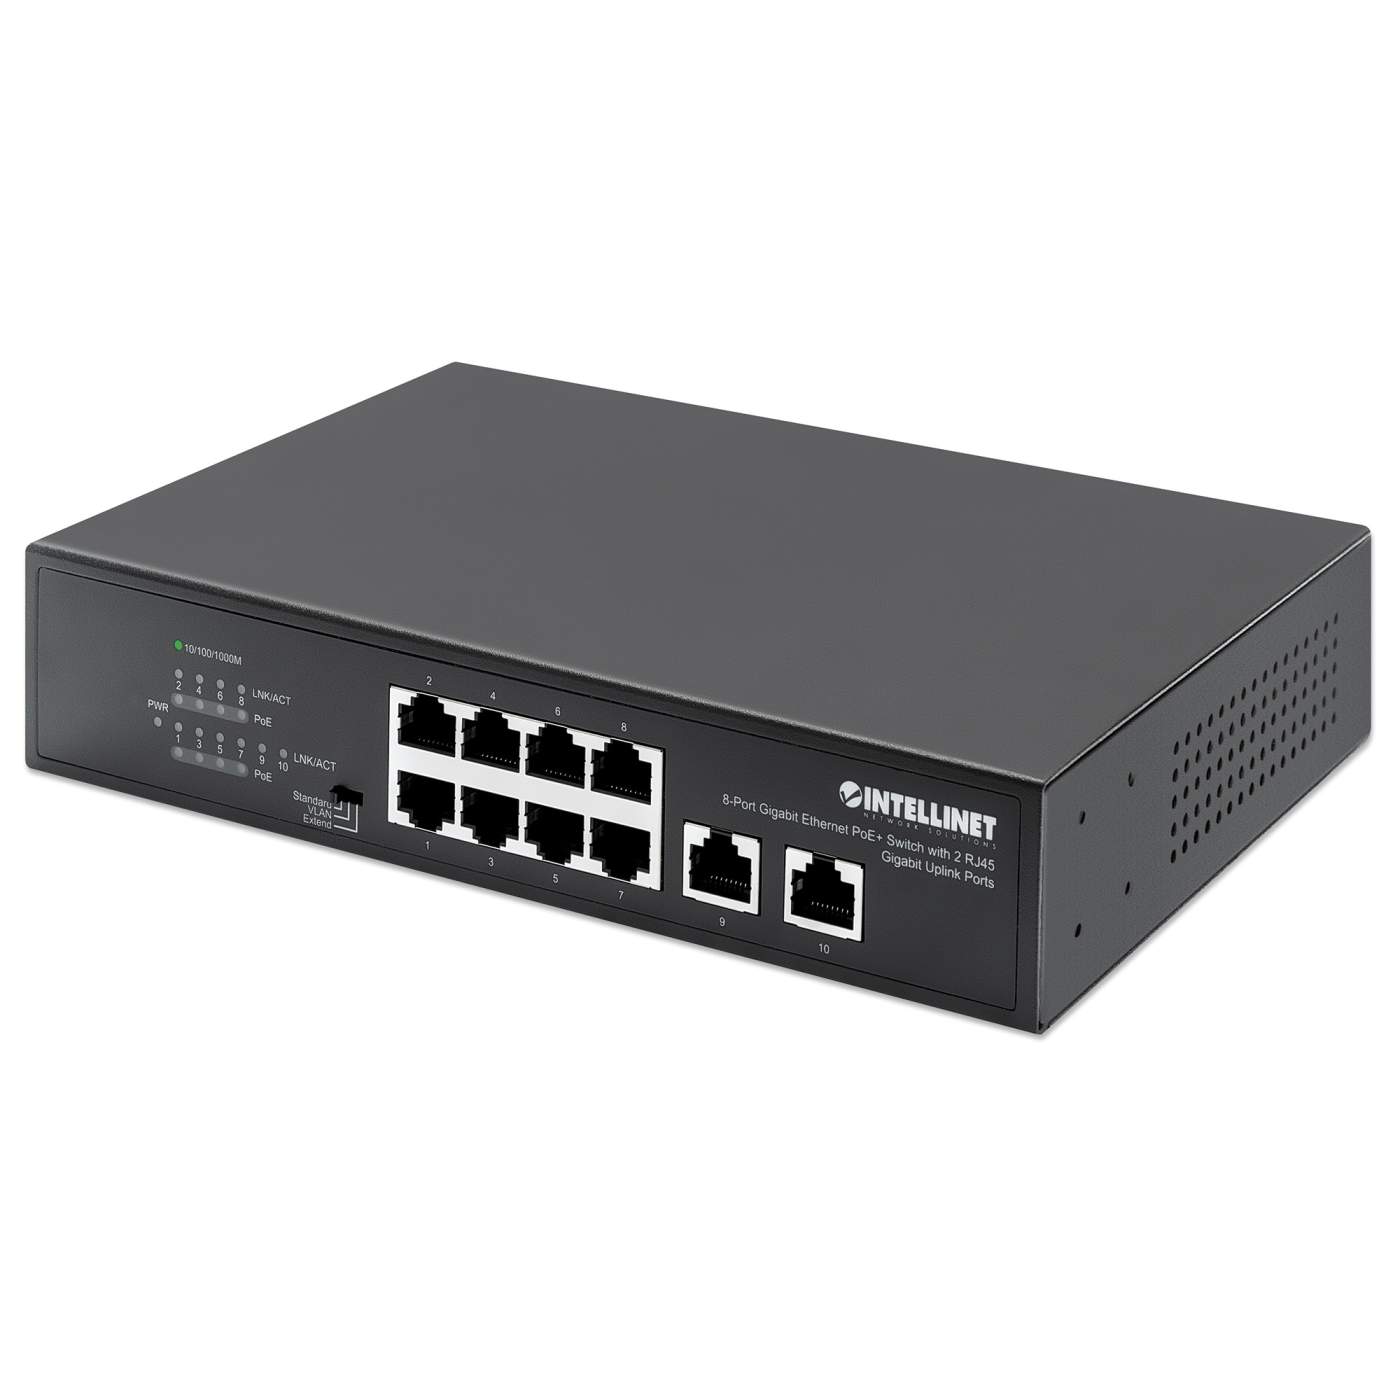 8-Port Gigabit Ethernet PoE+ Switch with 2 RJ45 Gigabit Uplink Ports Image 1